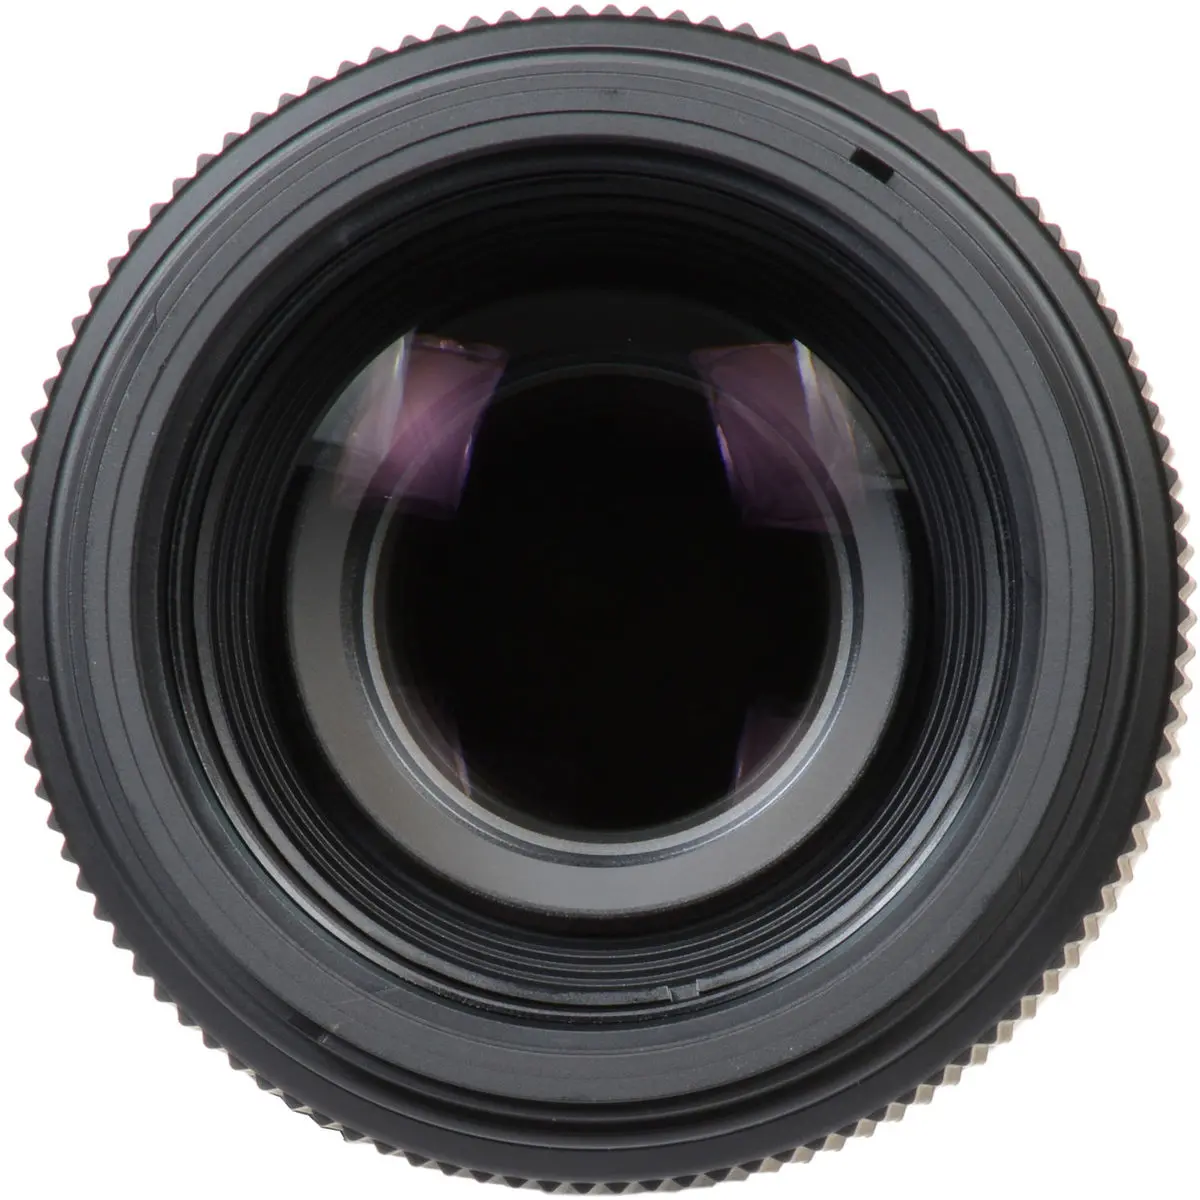 2. Sigma 100-400mm F5-6.3 DG OS HSM | C (Canon) Lens